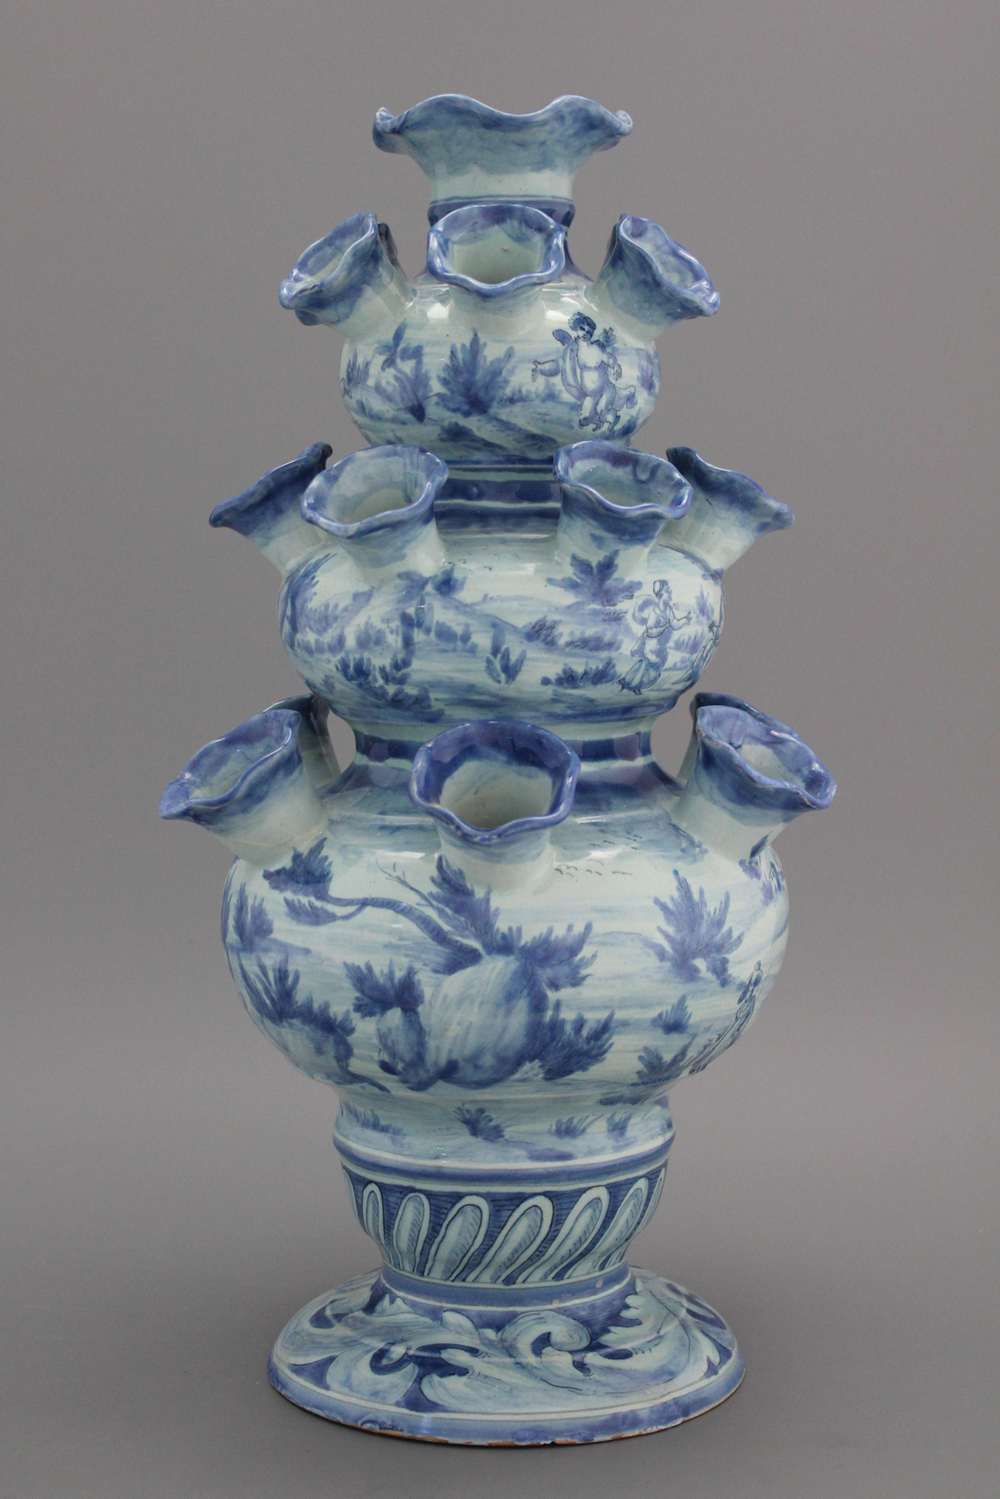 A large Italian Savona blue and white tulip vase, 18th C.